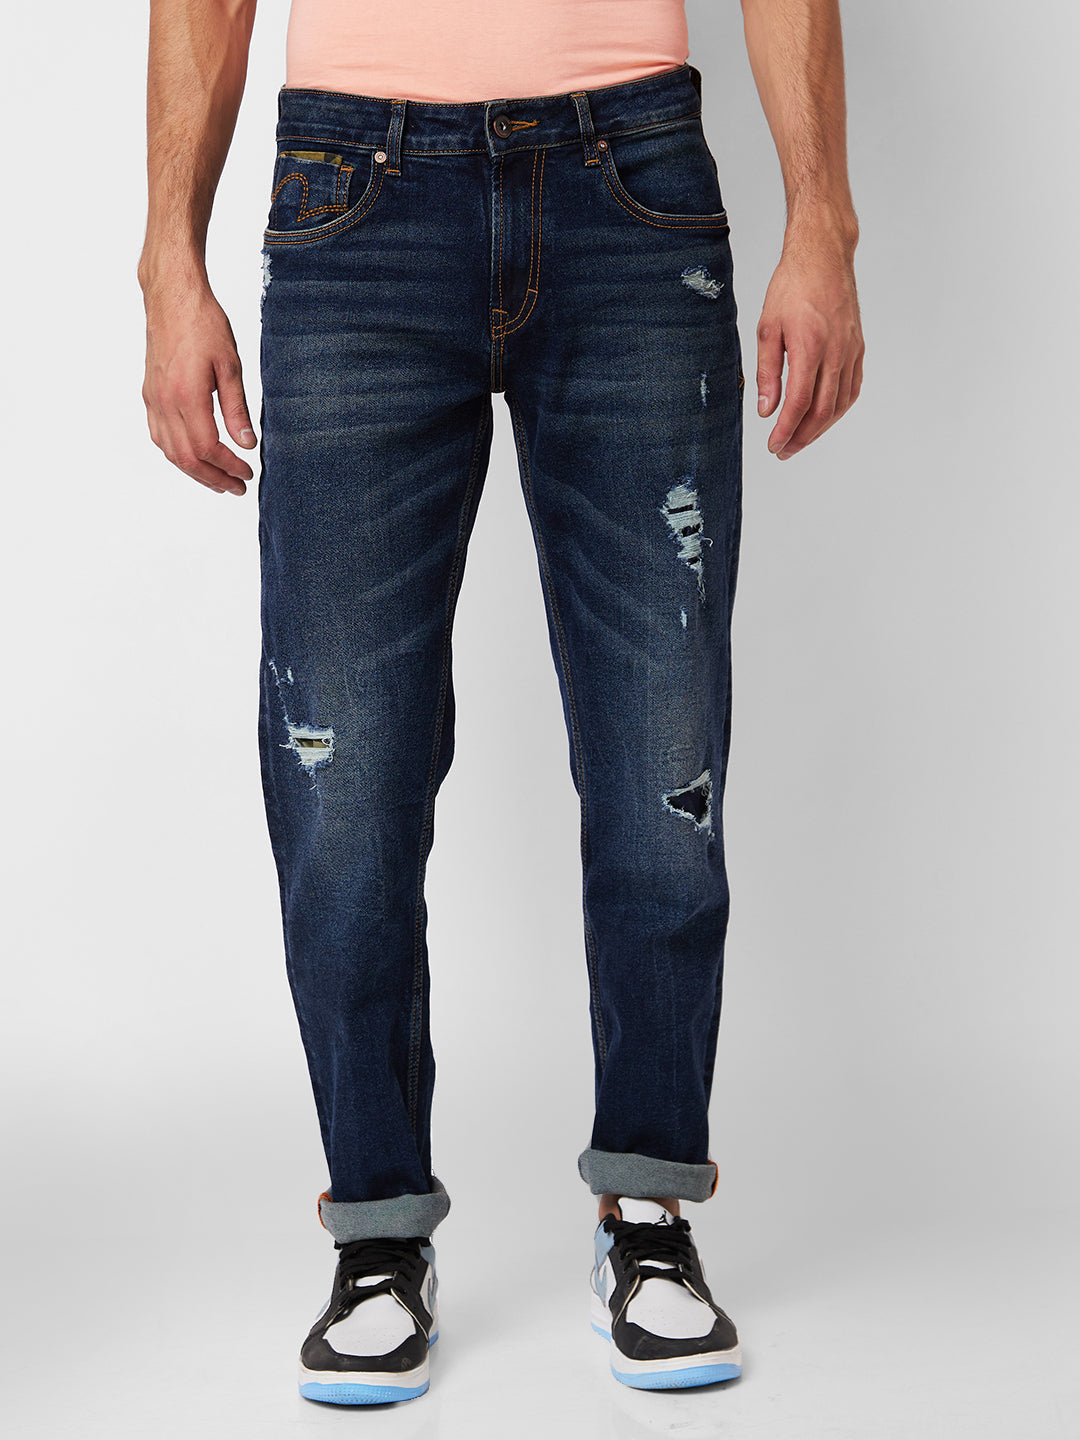 Liu Jo Jeans PANT SPALMATO - Trousers - nero/black - Zalando.de